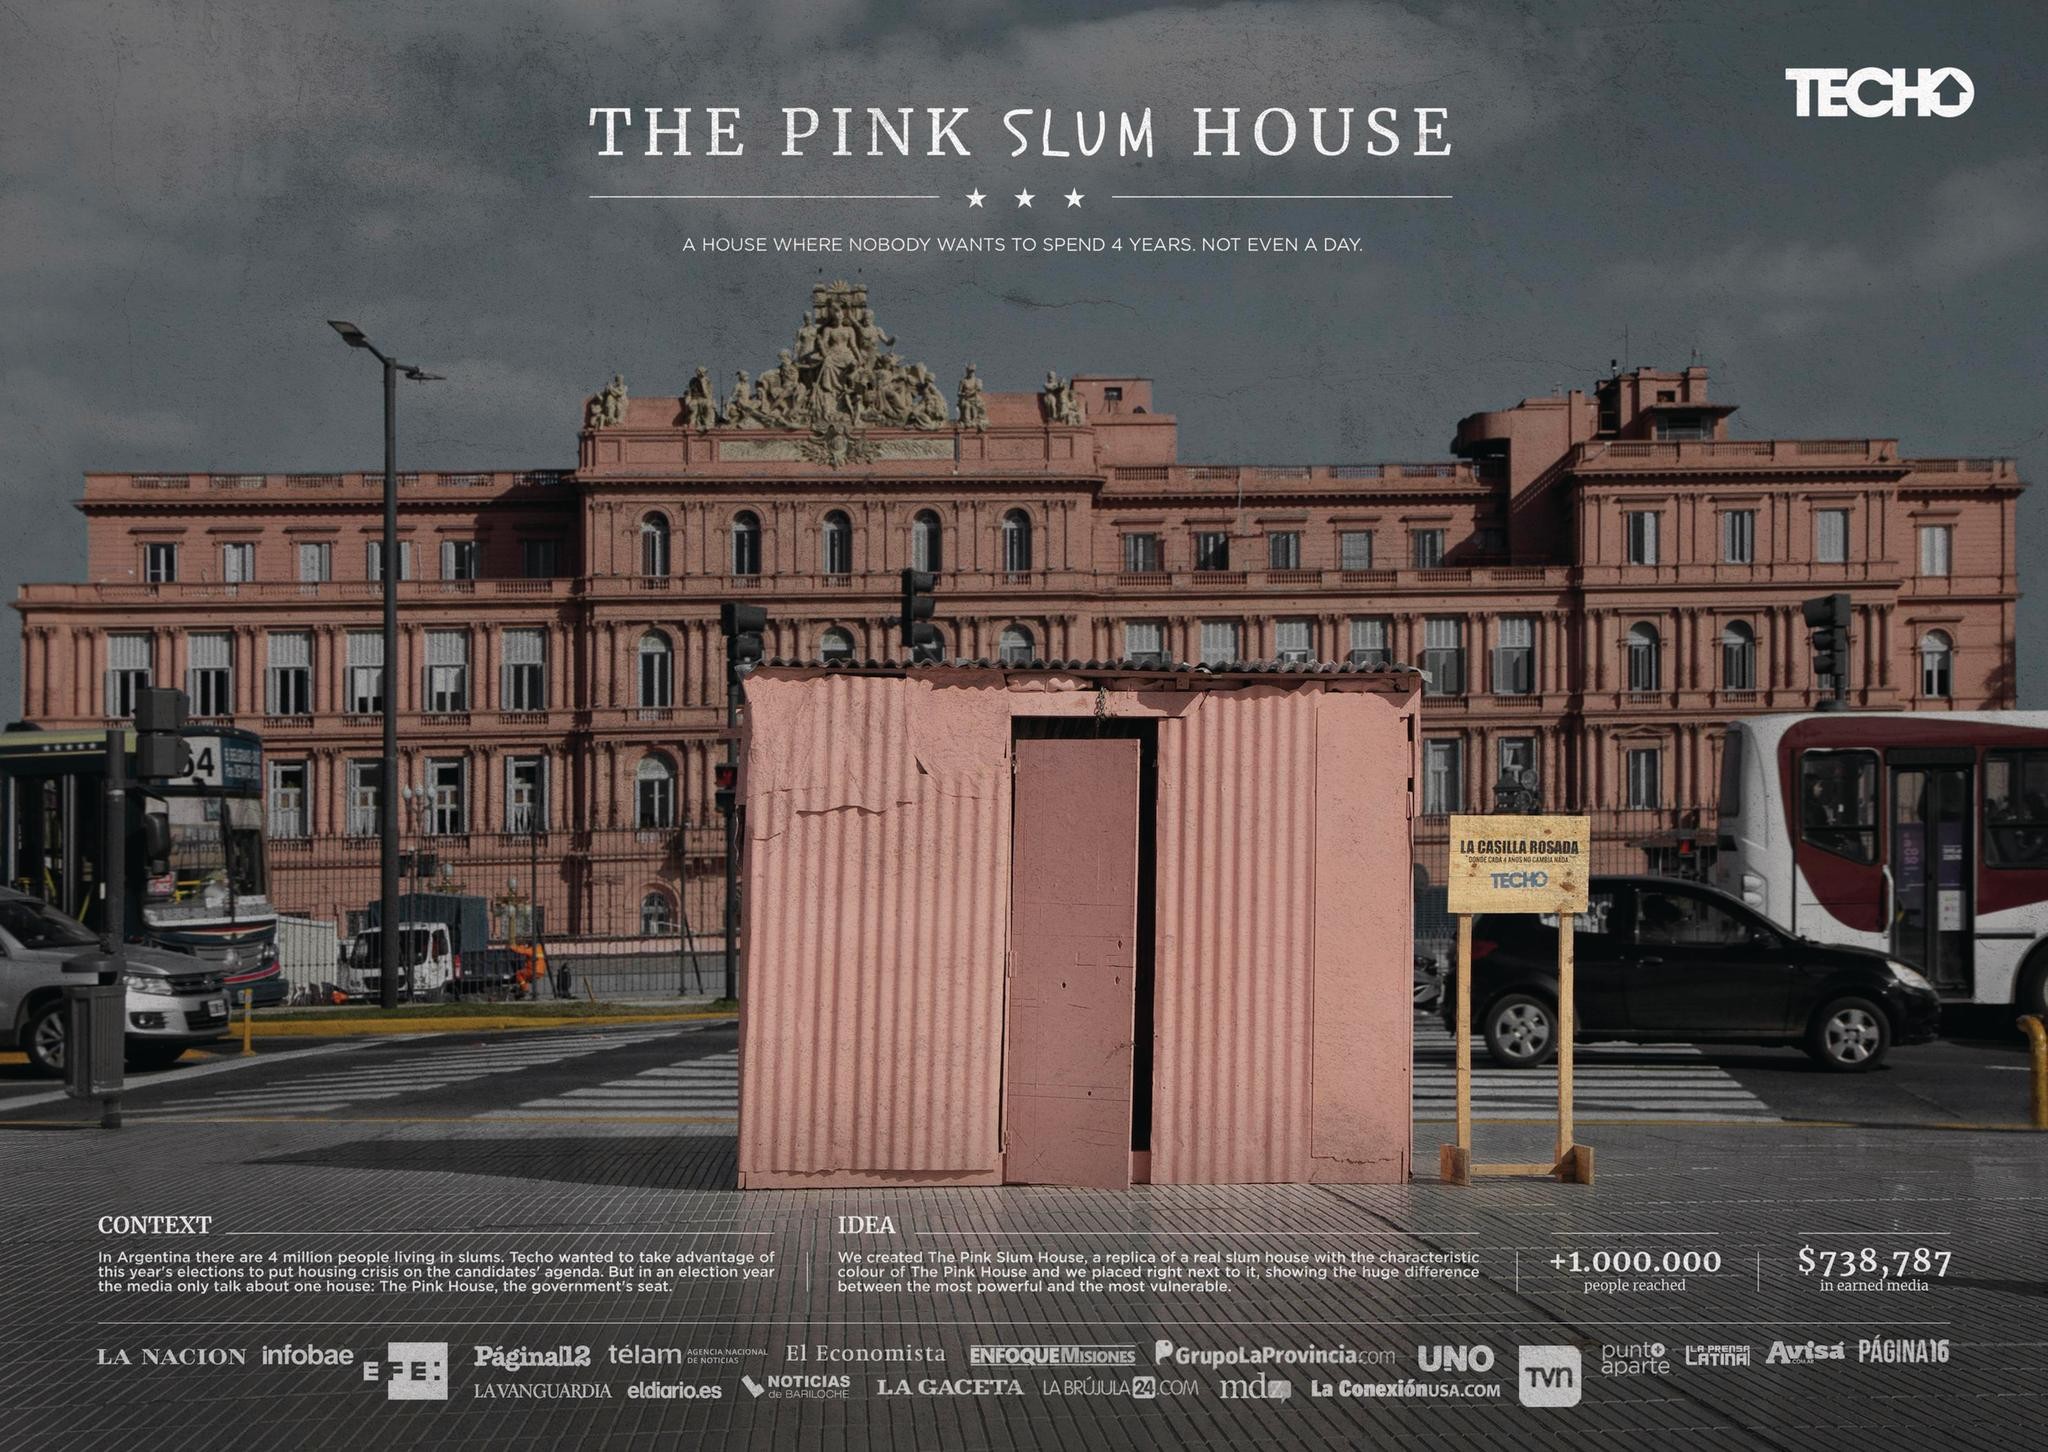 The Pink Slum House